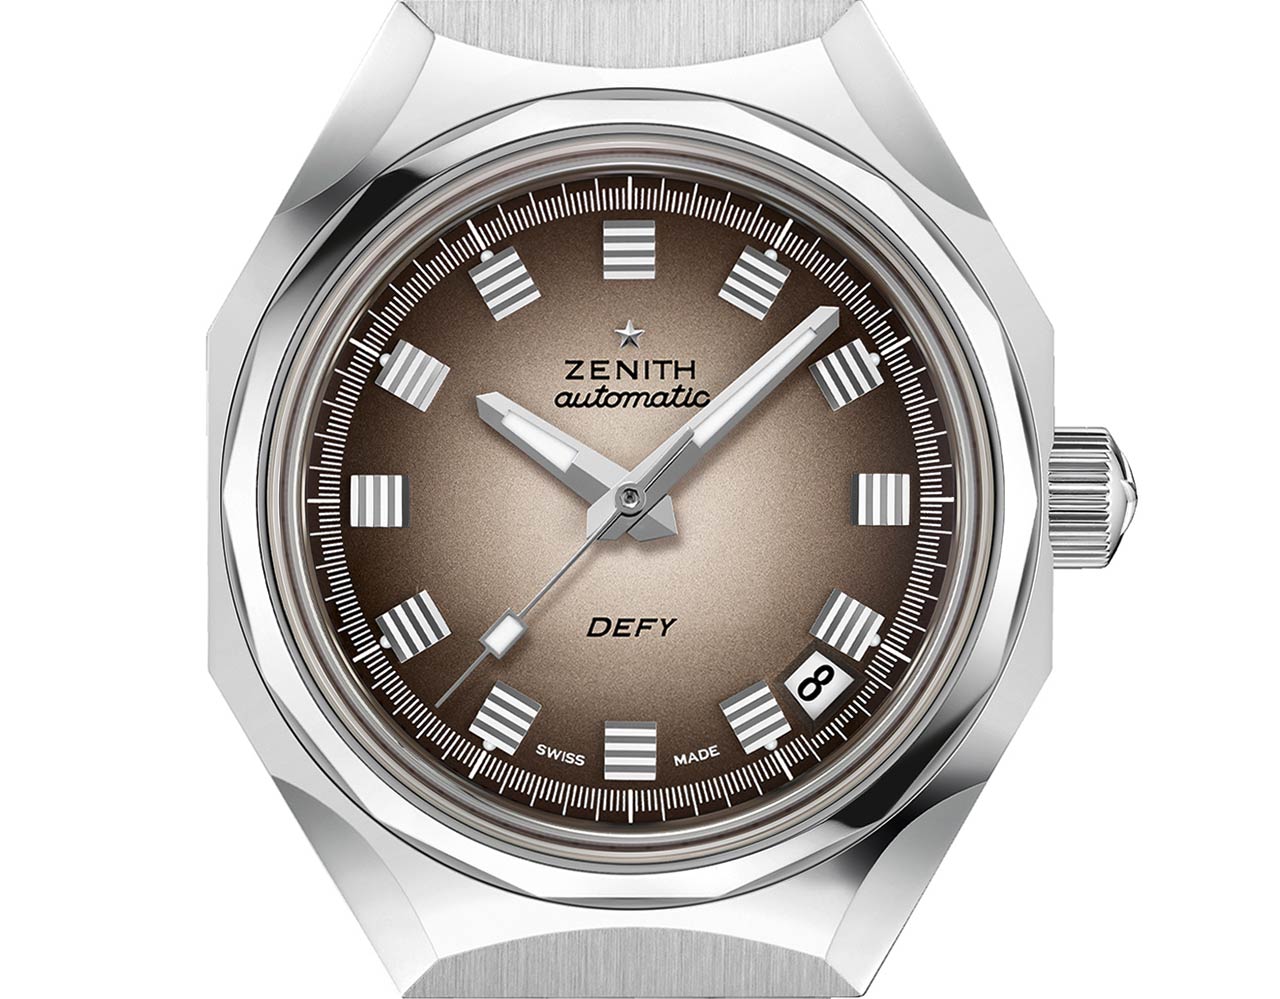 Zenith Defy Revival A3642 03.A3642.670:75.M3642 Detalle esfera